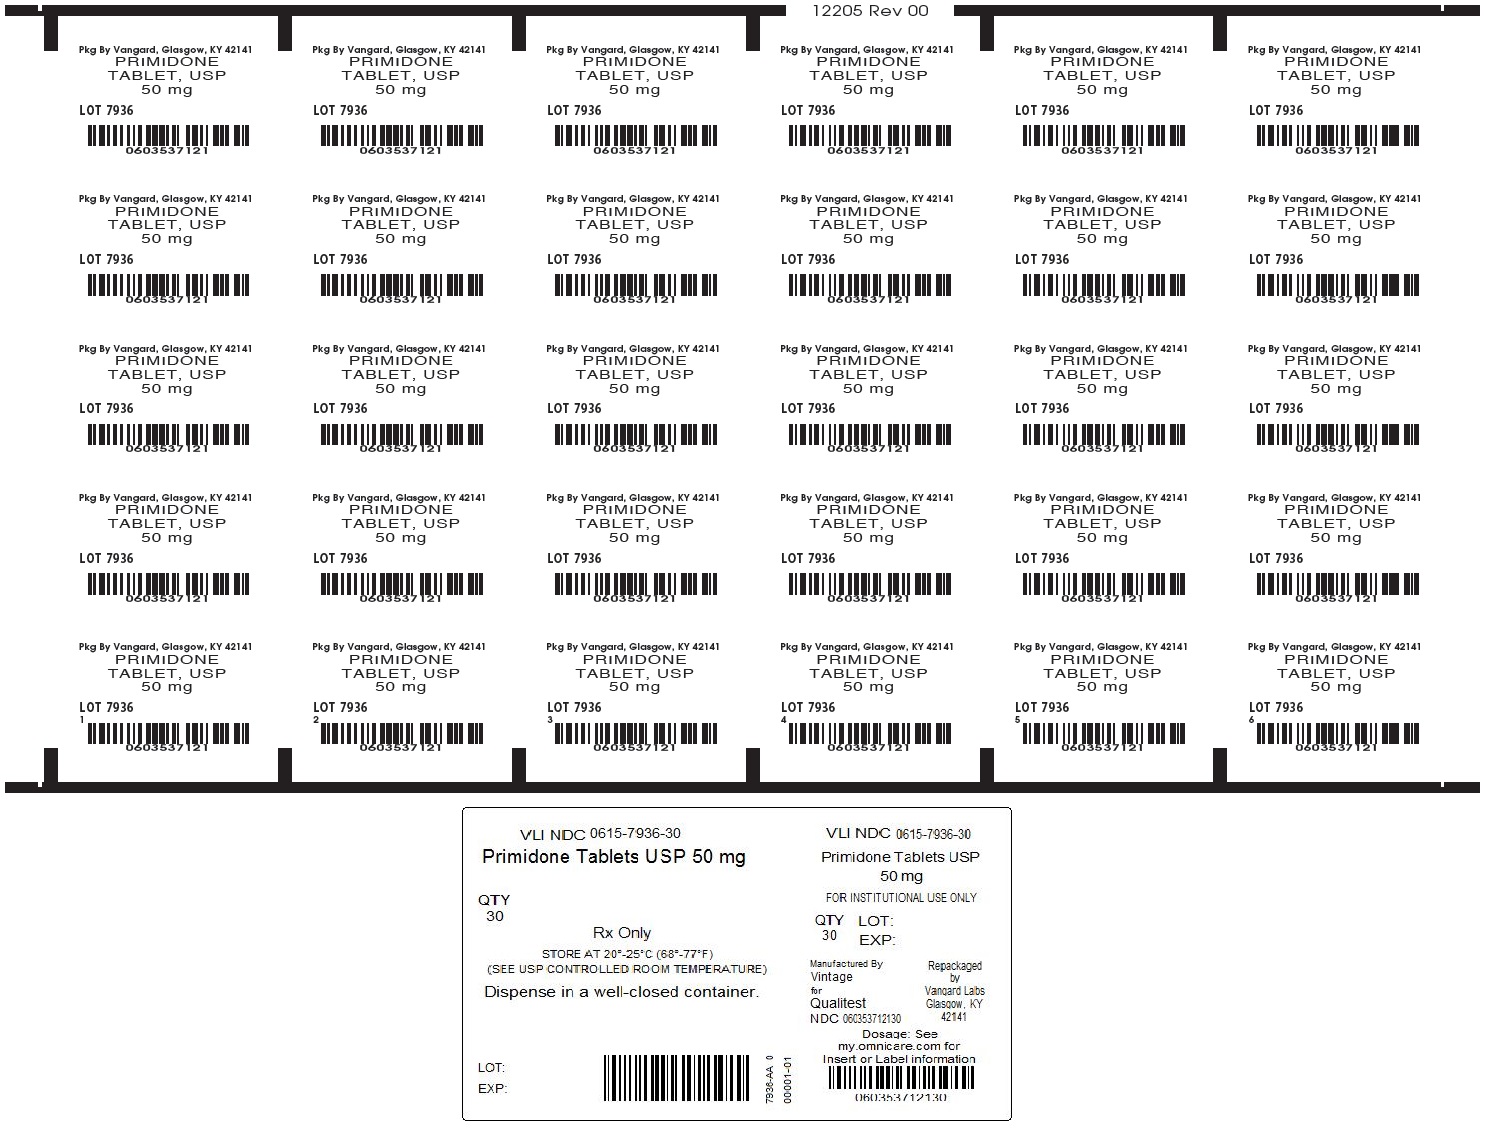 Primidone Tablets, USP 50mg Unit-dose label